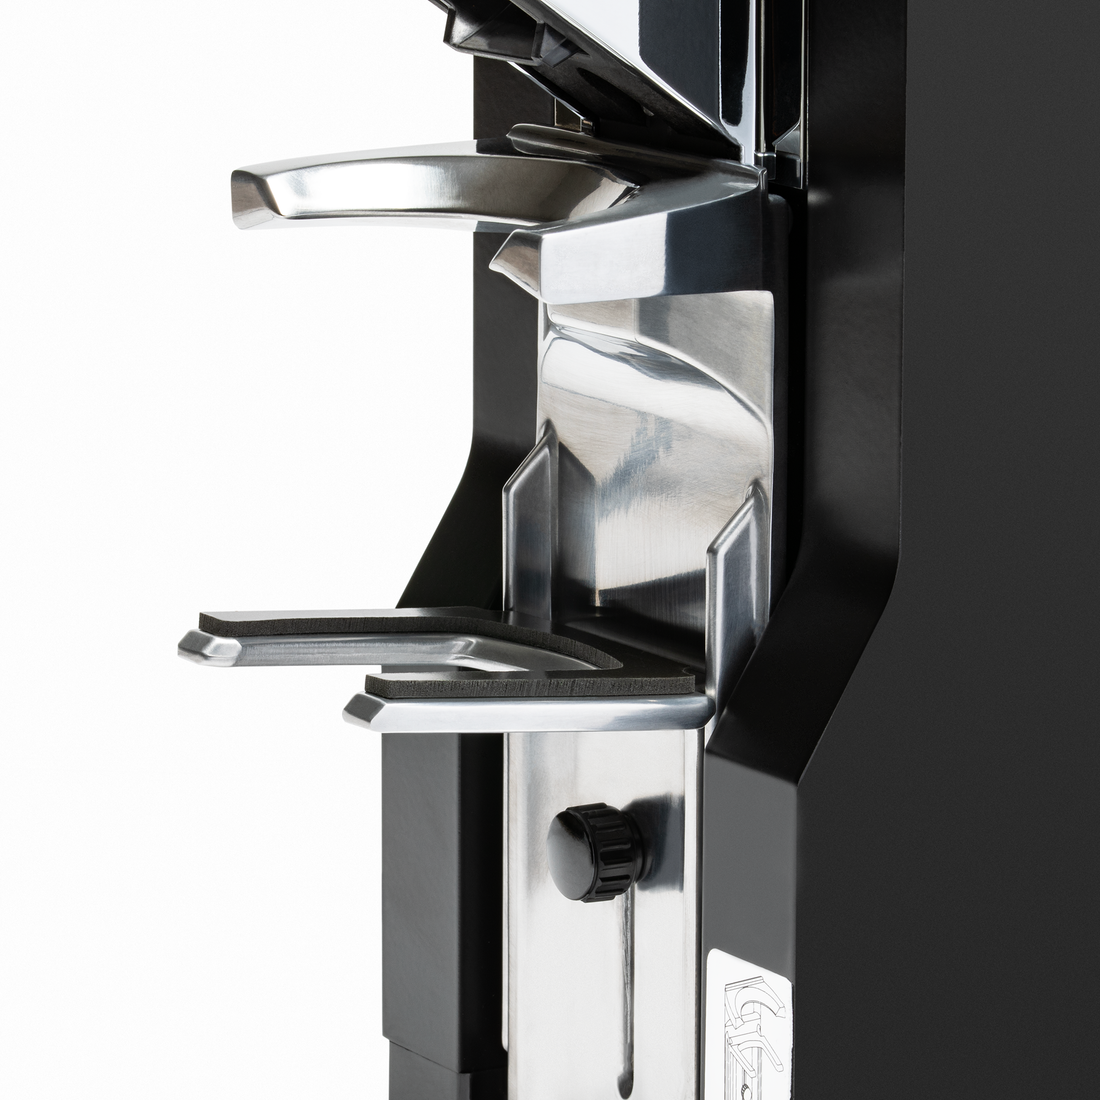 Eureka Mignon Libra Weight Based Espresso Grinder in Matte Black